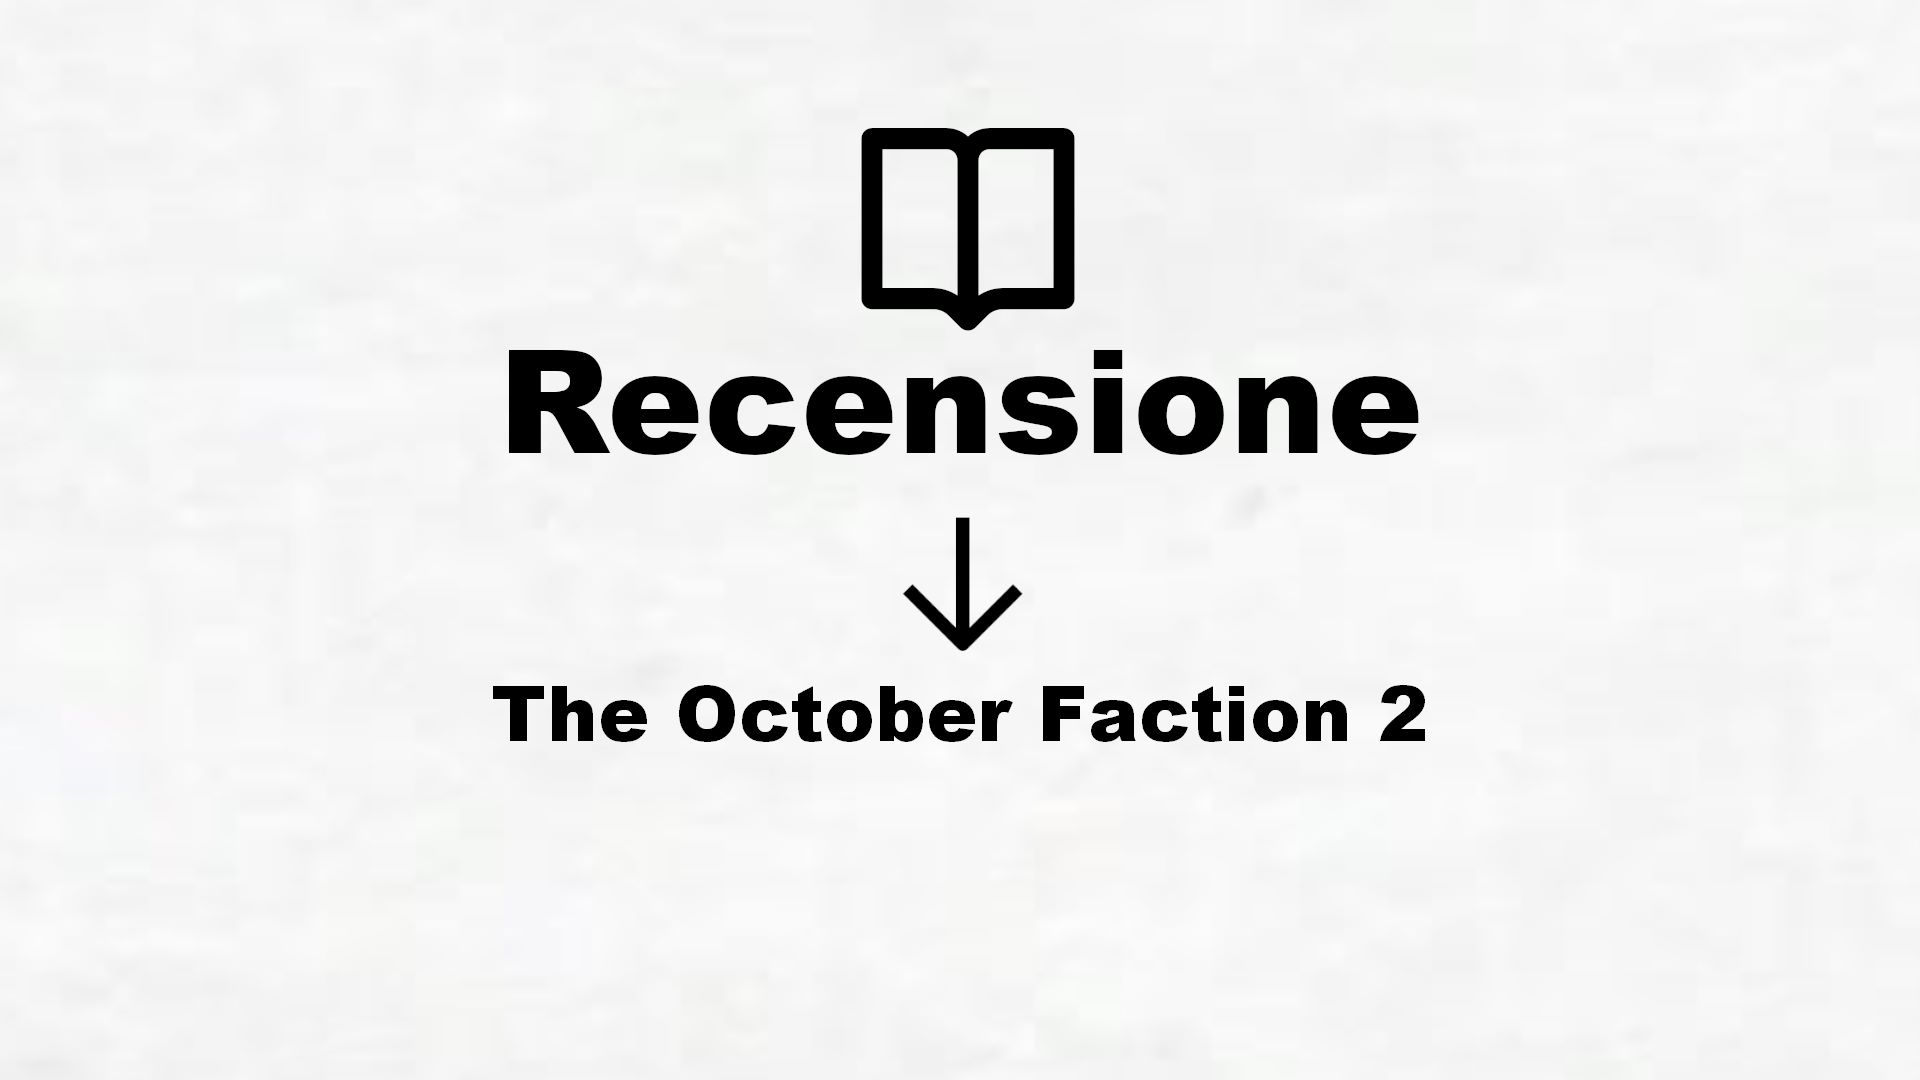 The October Faction 2 – Recensione Libro